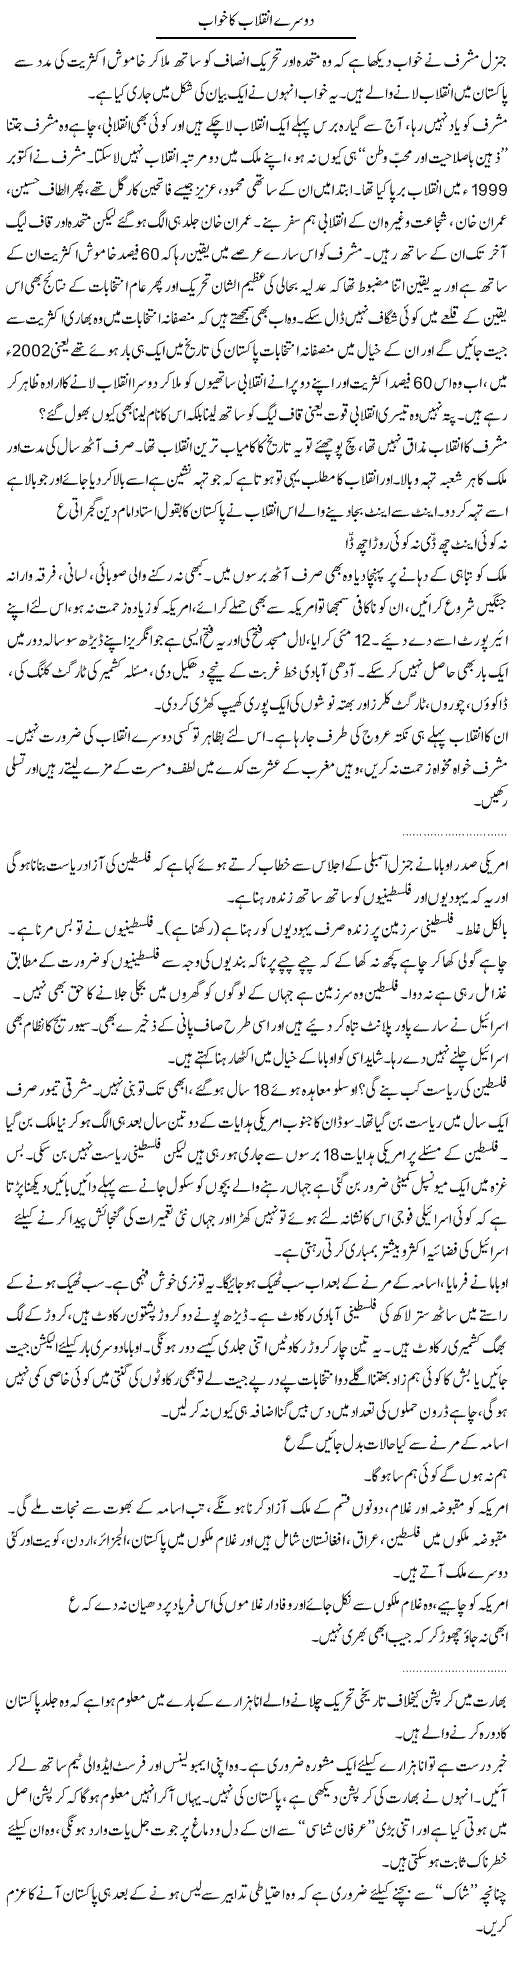 Dream of Musharraf Express Column Abdul Qadir 23 September 2011